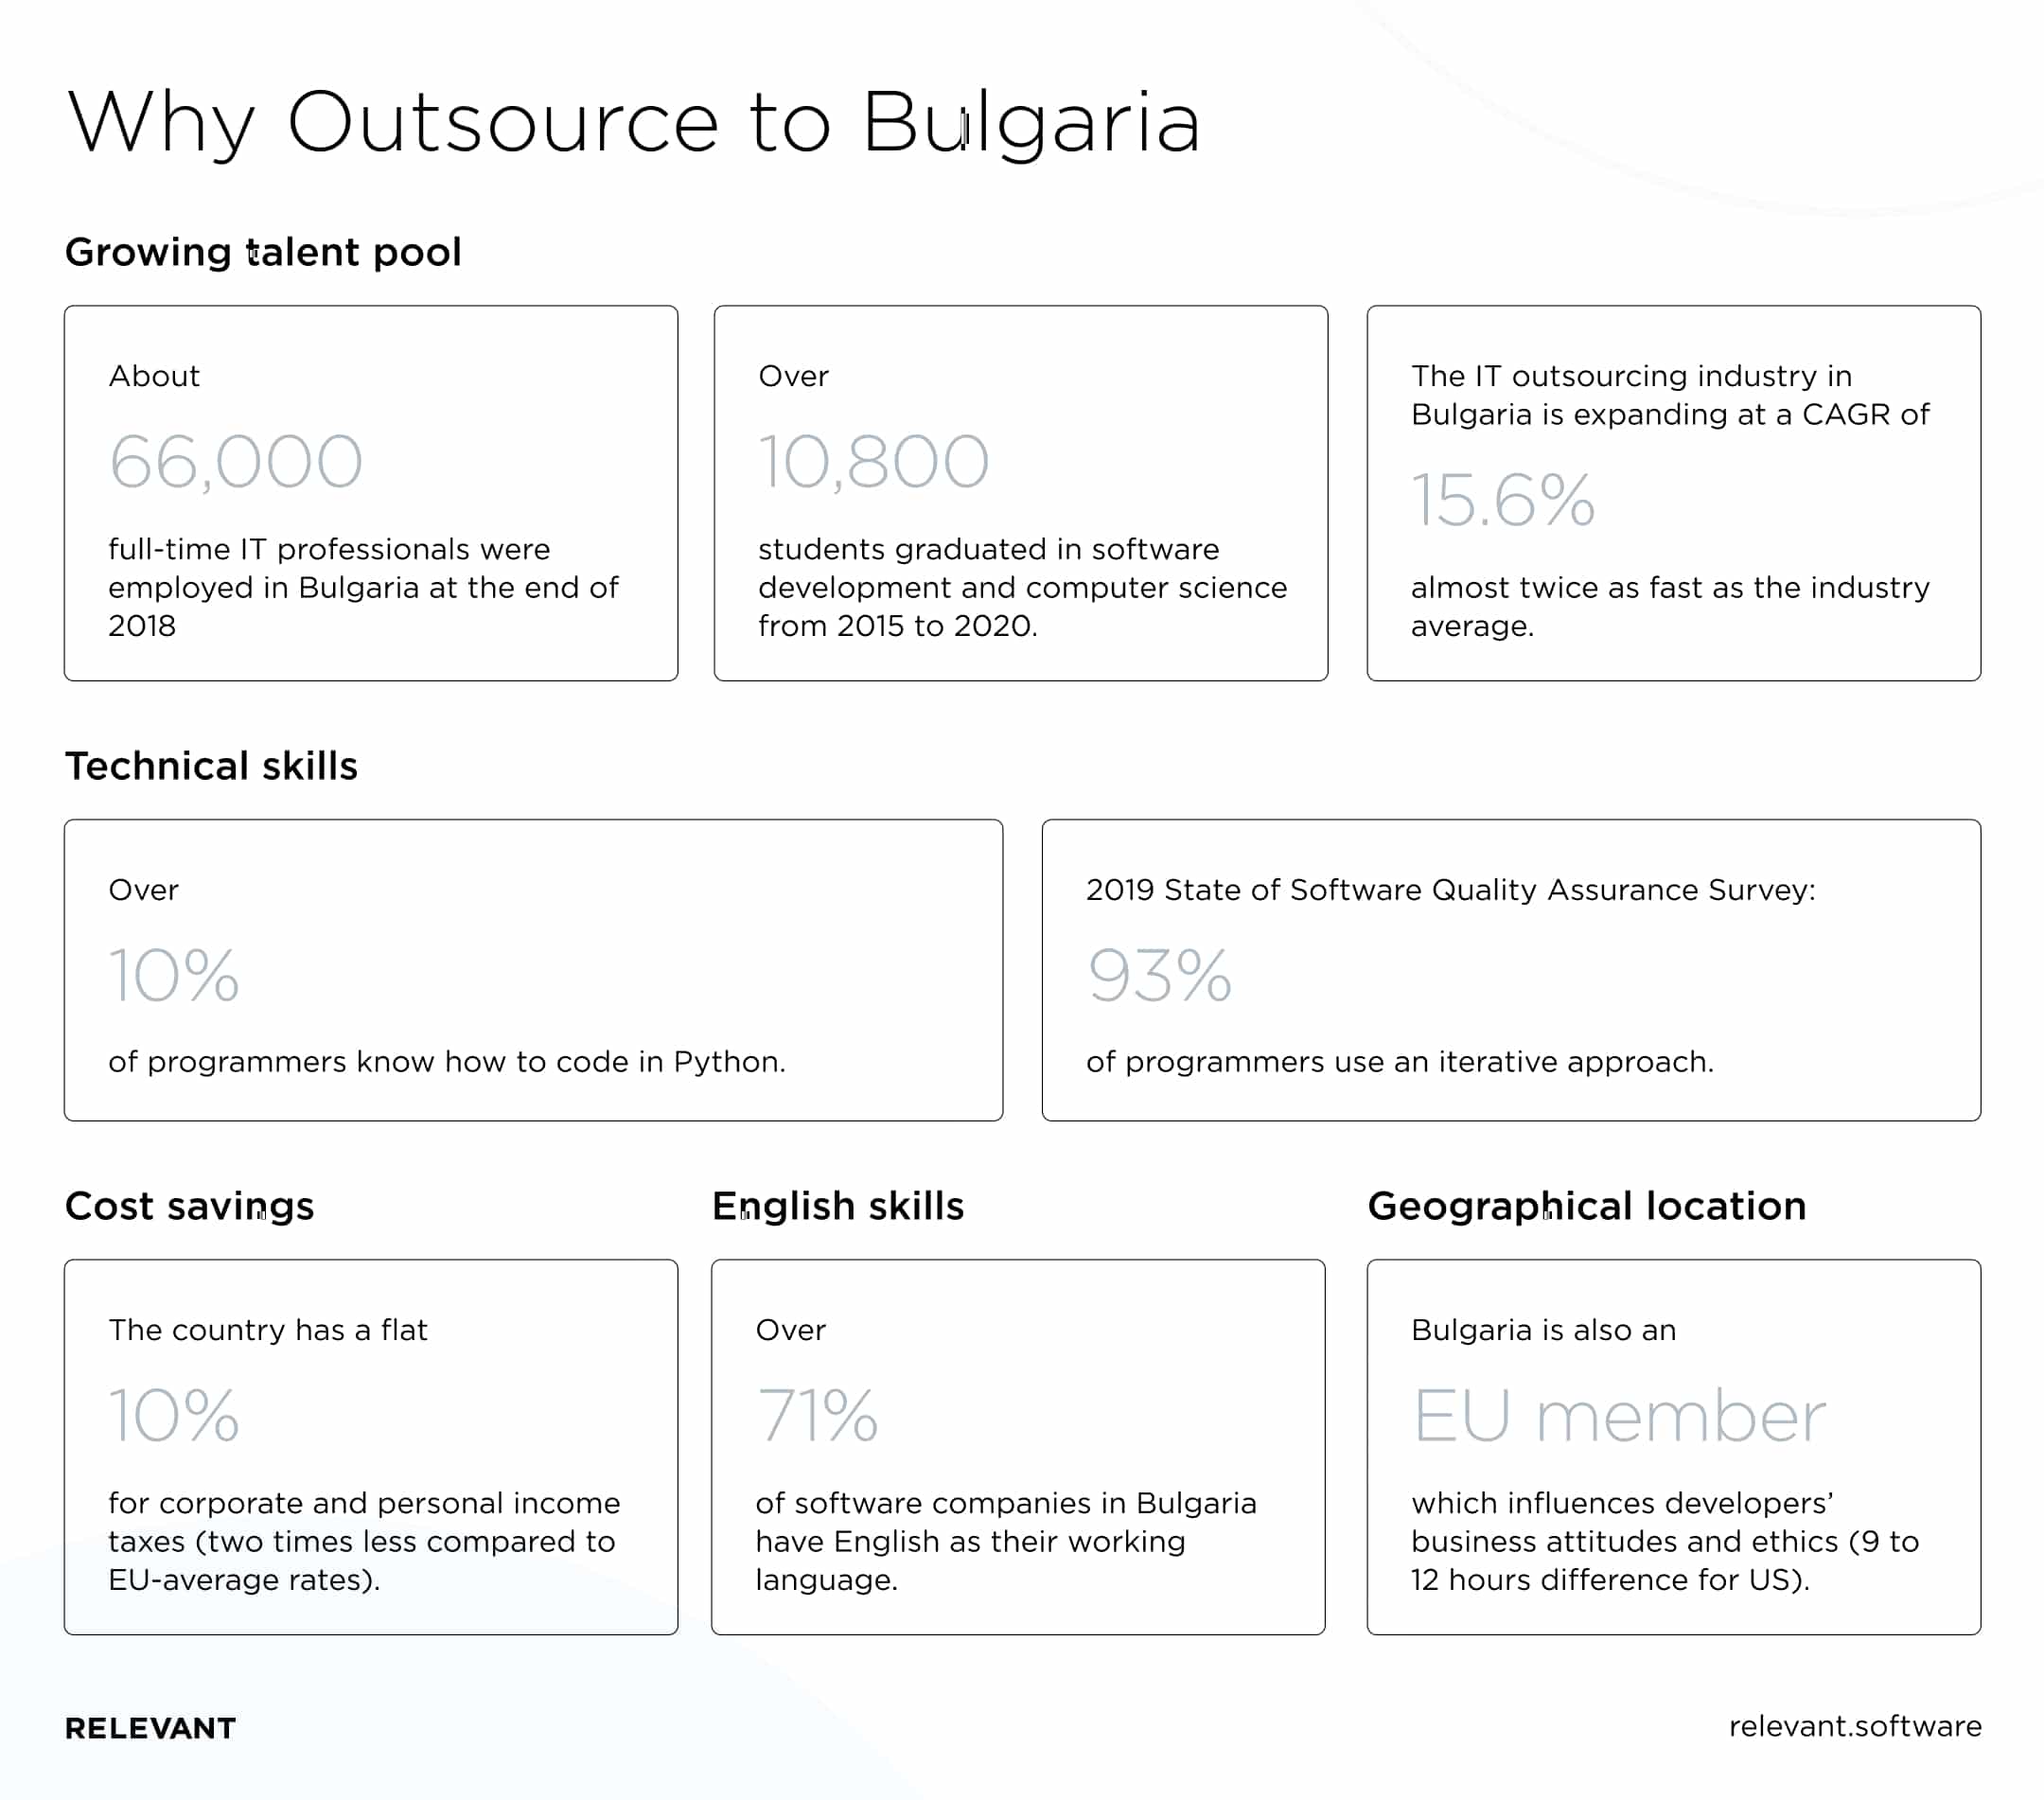 Five main reasons to outsource software development to Bulgaria